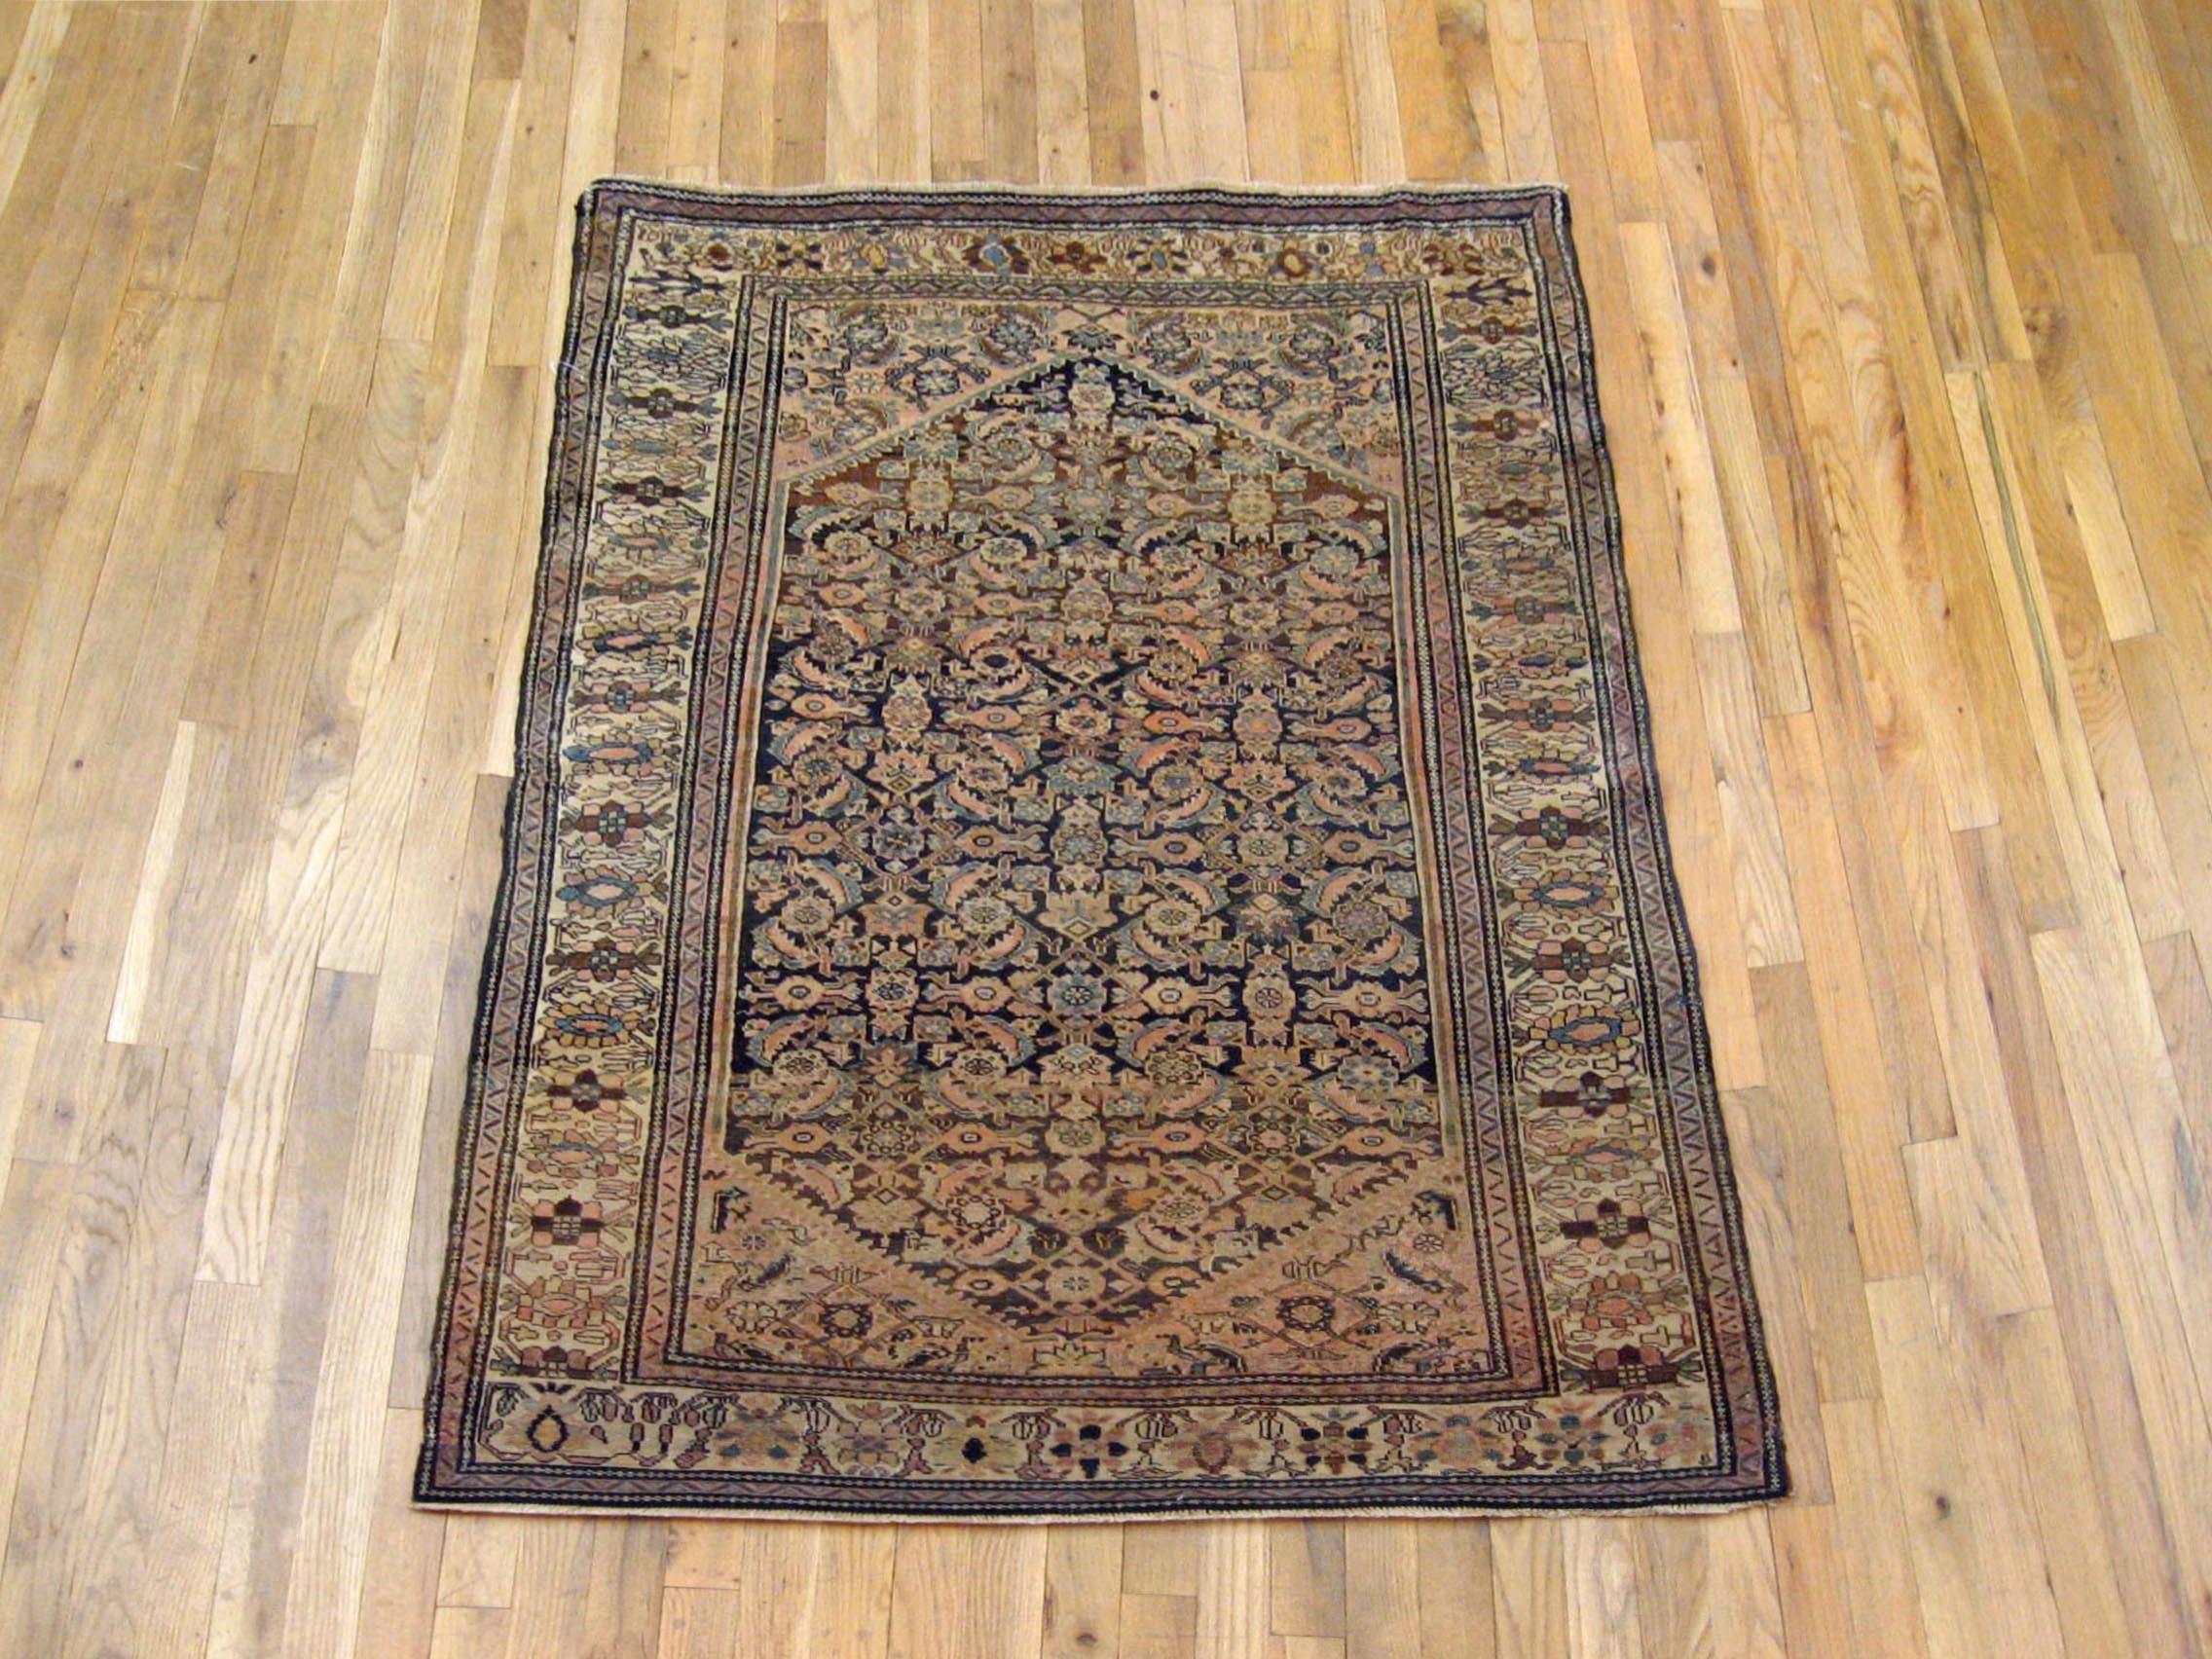 Antique Ferahan Sarouk Oriental rug, circa 1900, small size.

An antique Ferahan Sarouk oriental rug, size 4'9